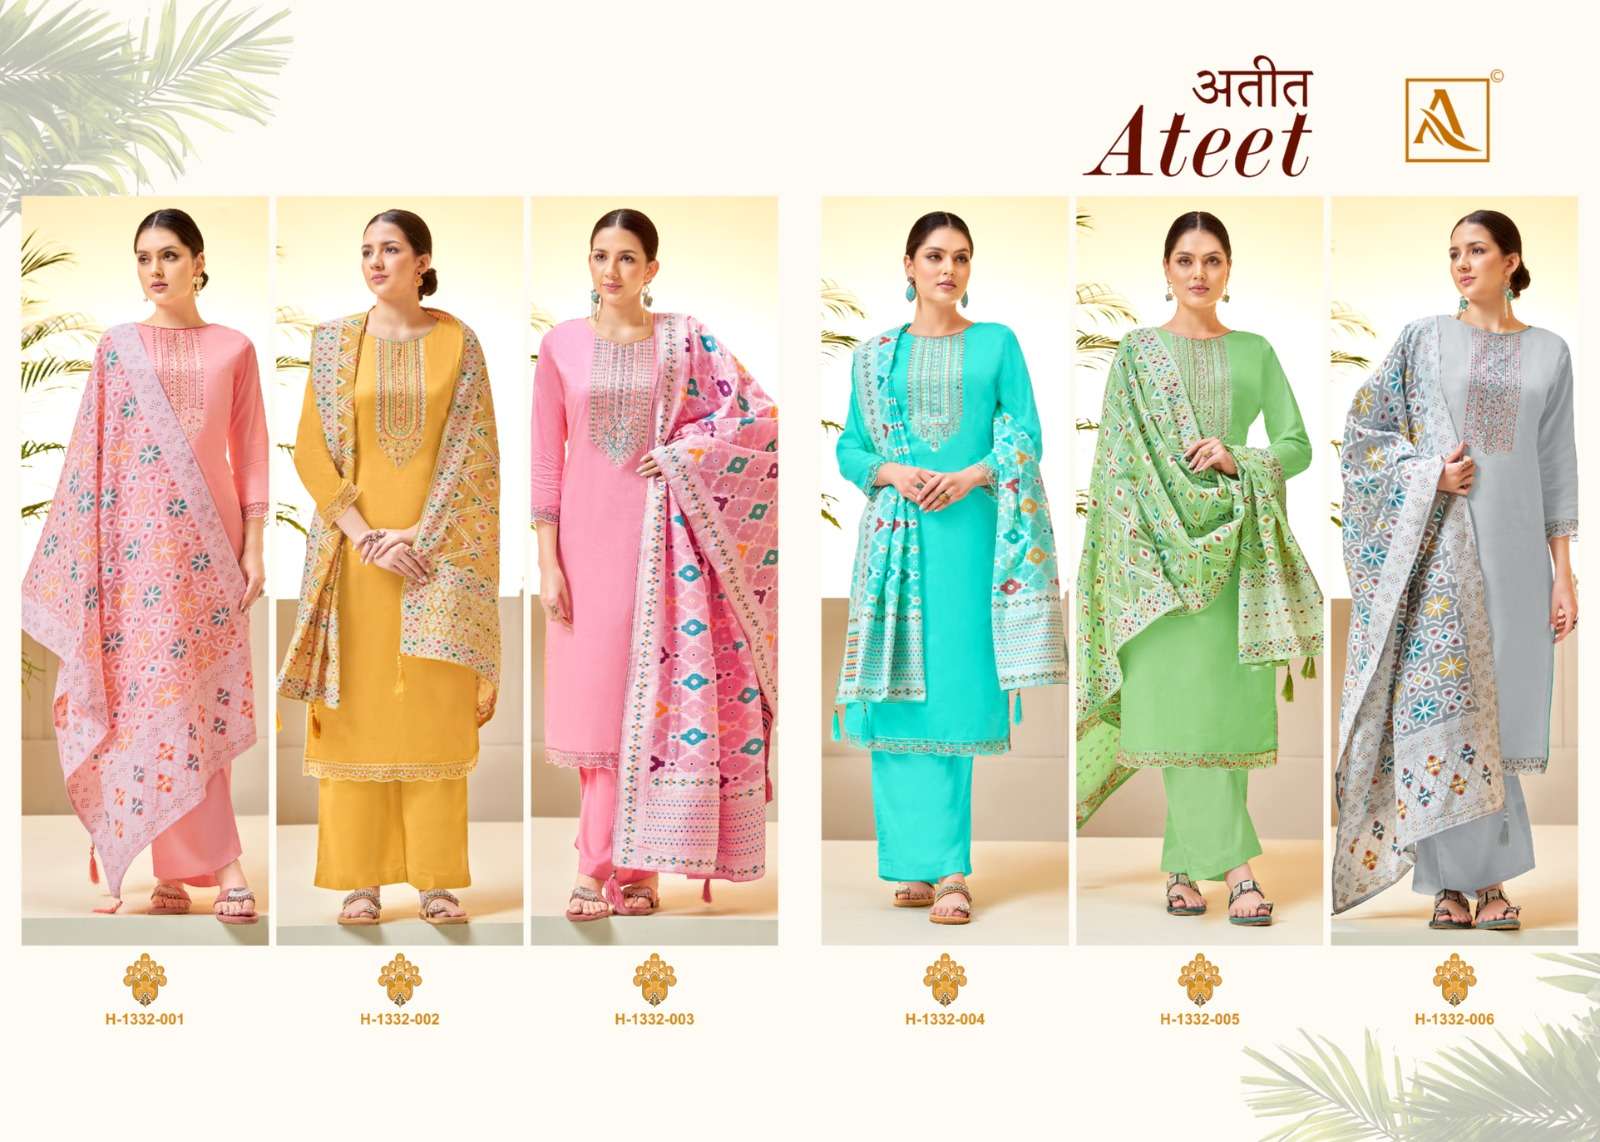 alok suit ateet 1332-001-006 series latest pakistani salwar kameez wholesaler surat gujarat